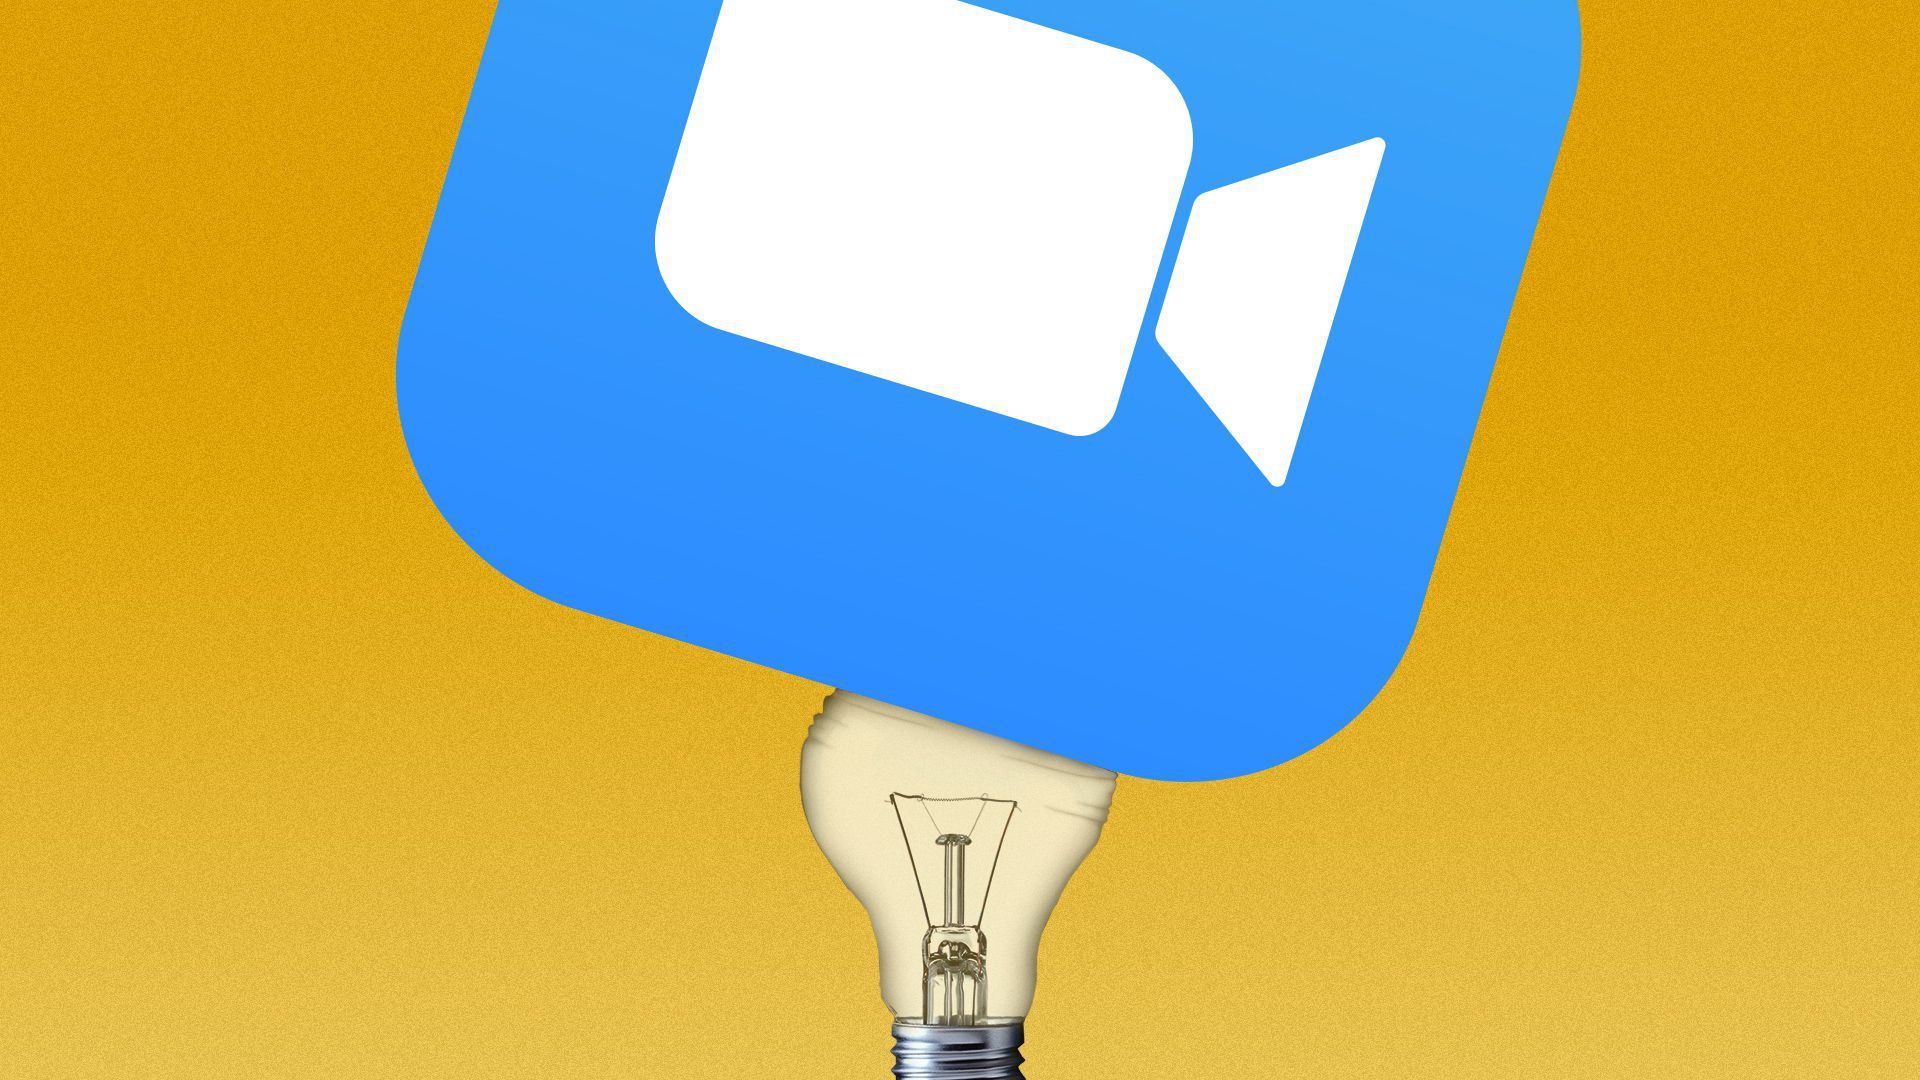 Illustration of a Zoom video icon squashing a light bulb